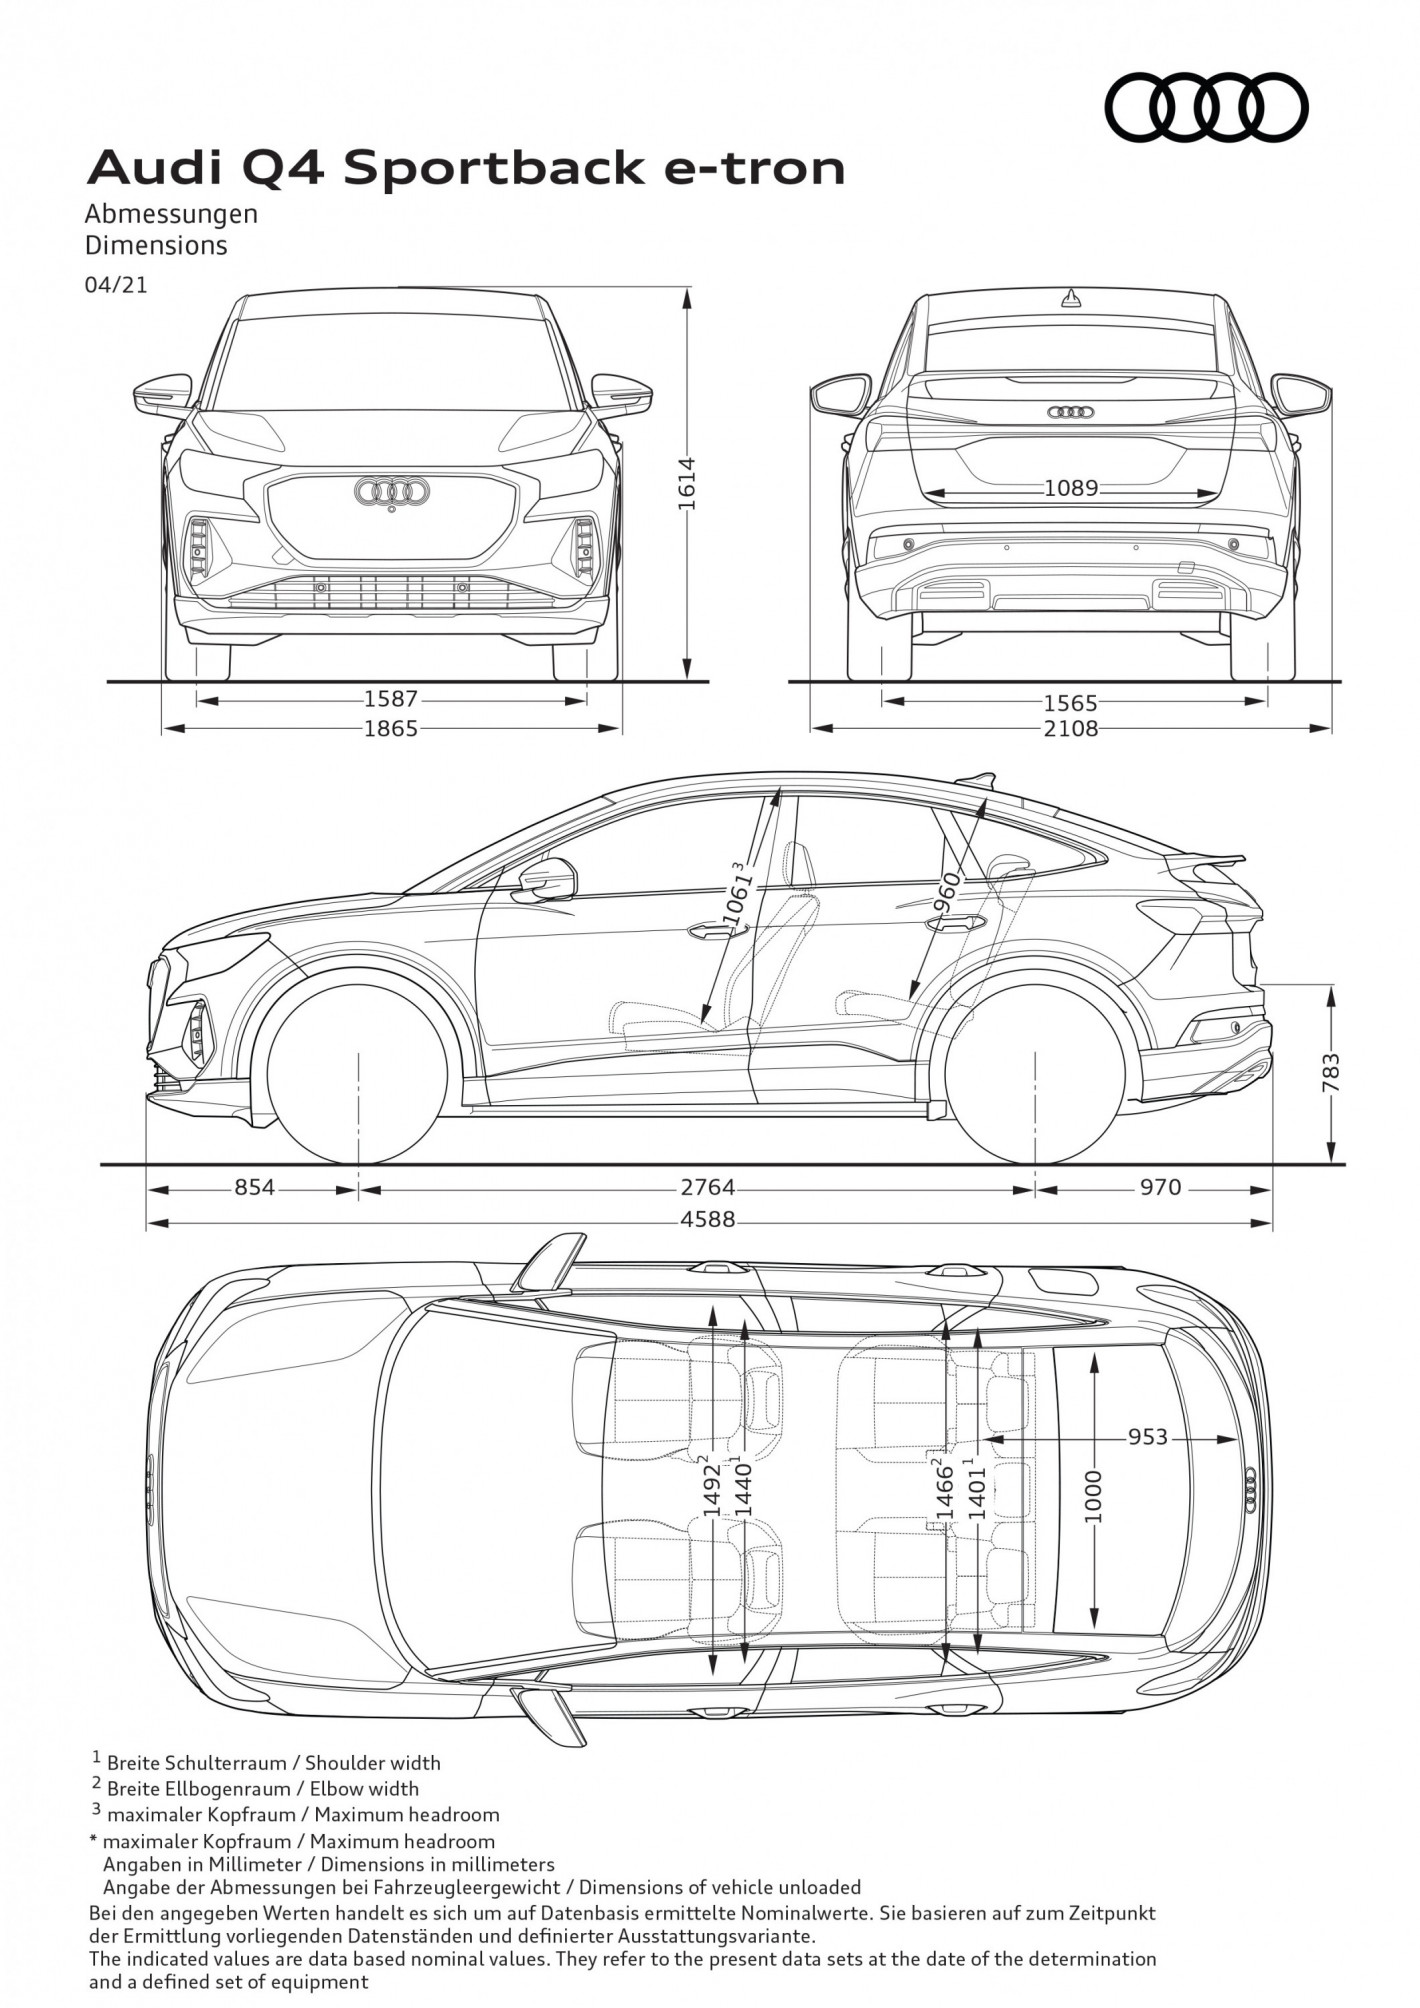 Audi Q4 e-tron Sportback dimension